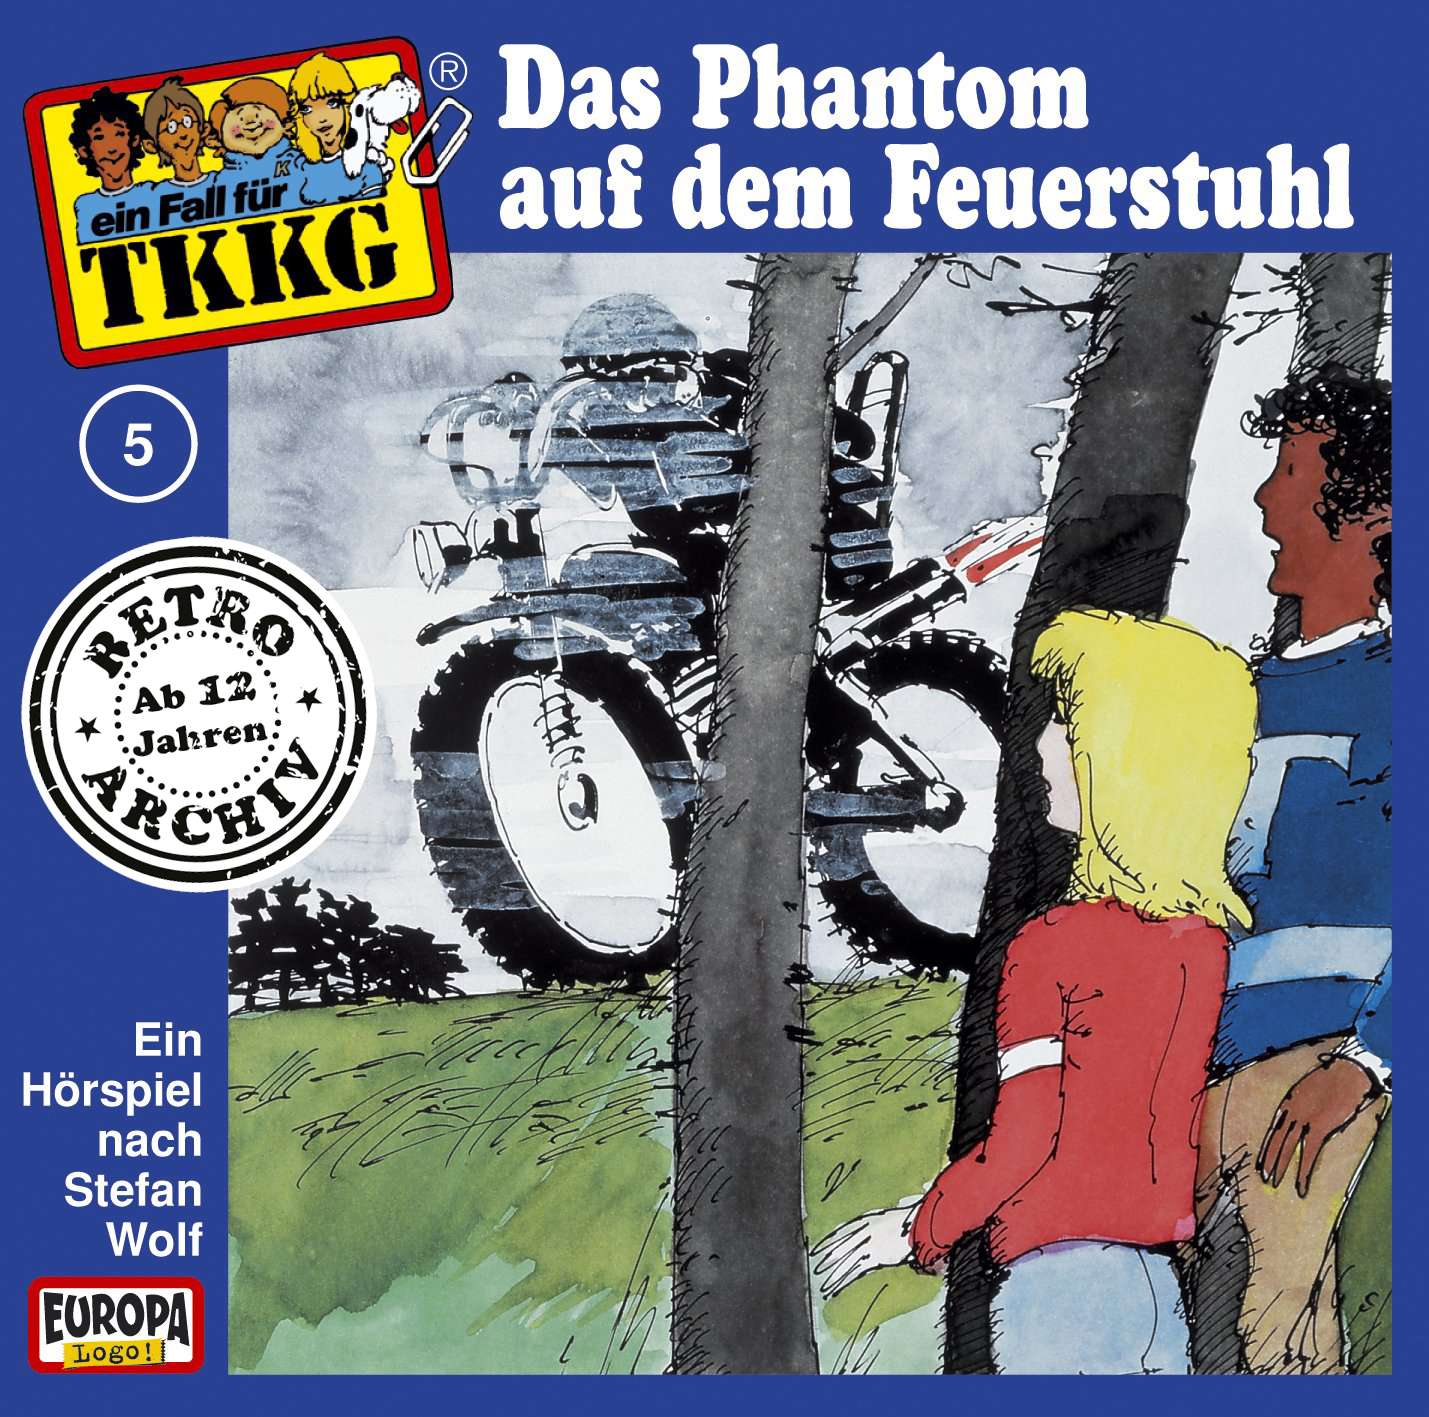 TKKG Retro-Archiv: Das Phantom auf dem Feuerstuhl